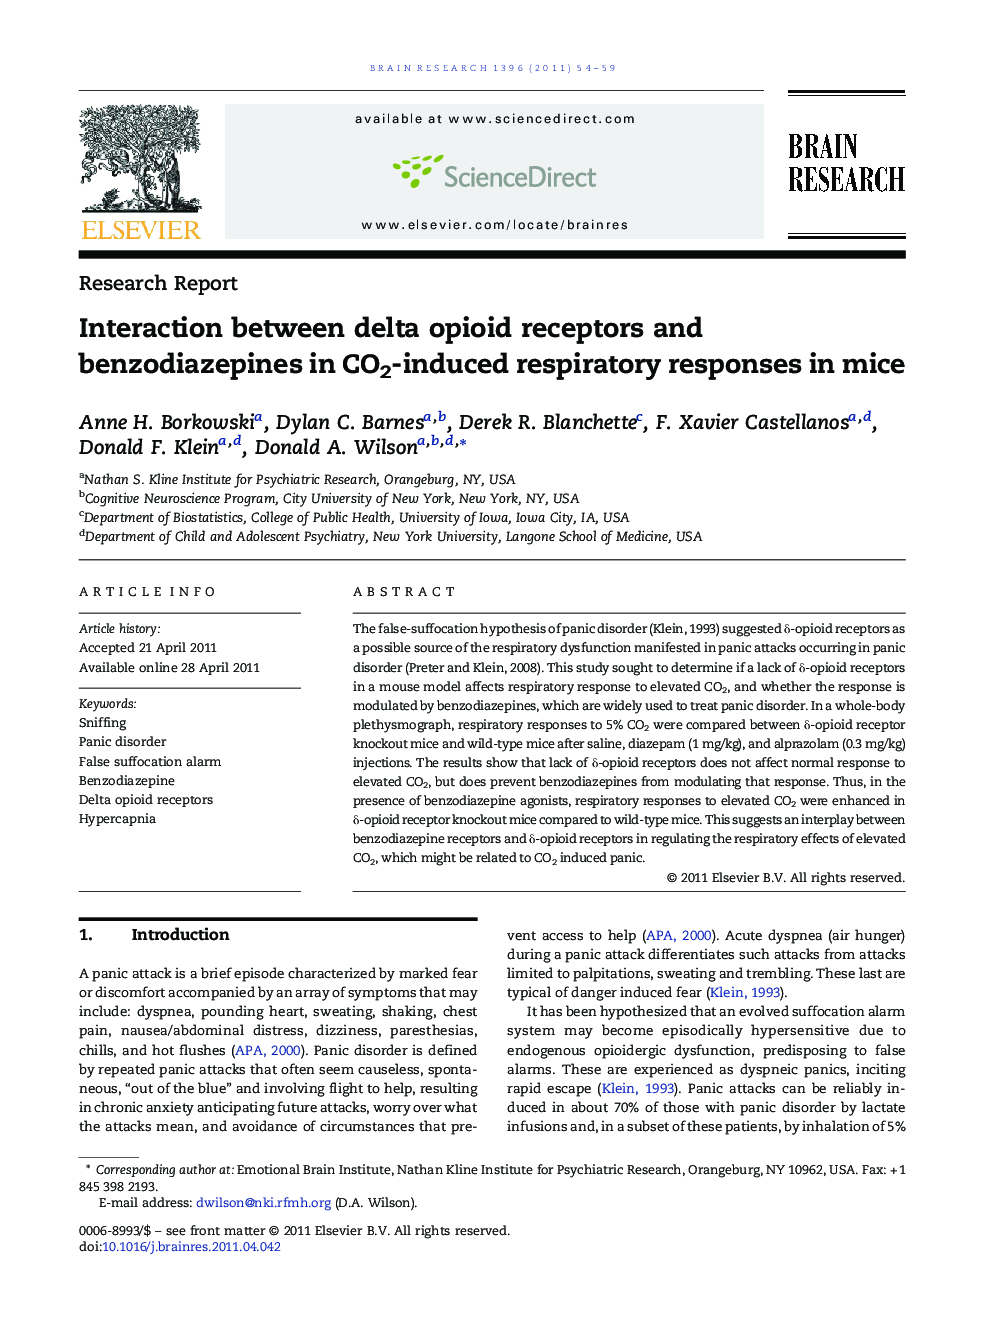 Interaction between delta opioid receptors and benzodiazepines in CO2-induced respiratory responses in mice